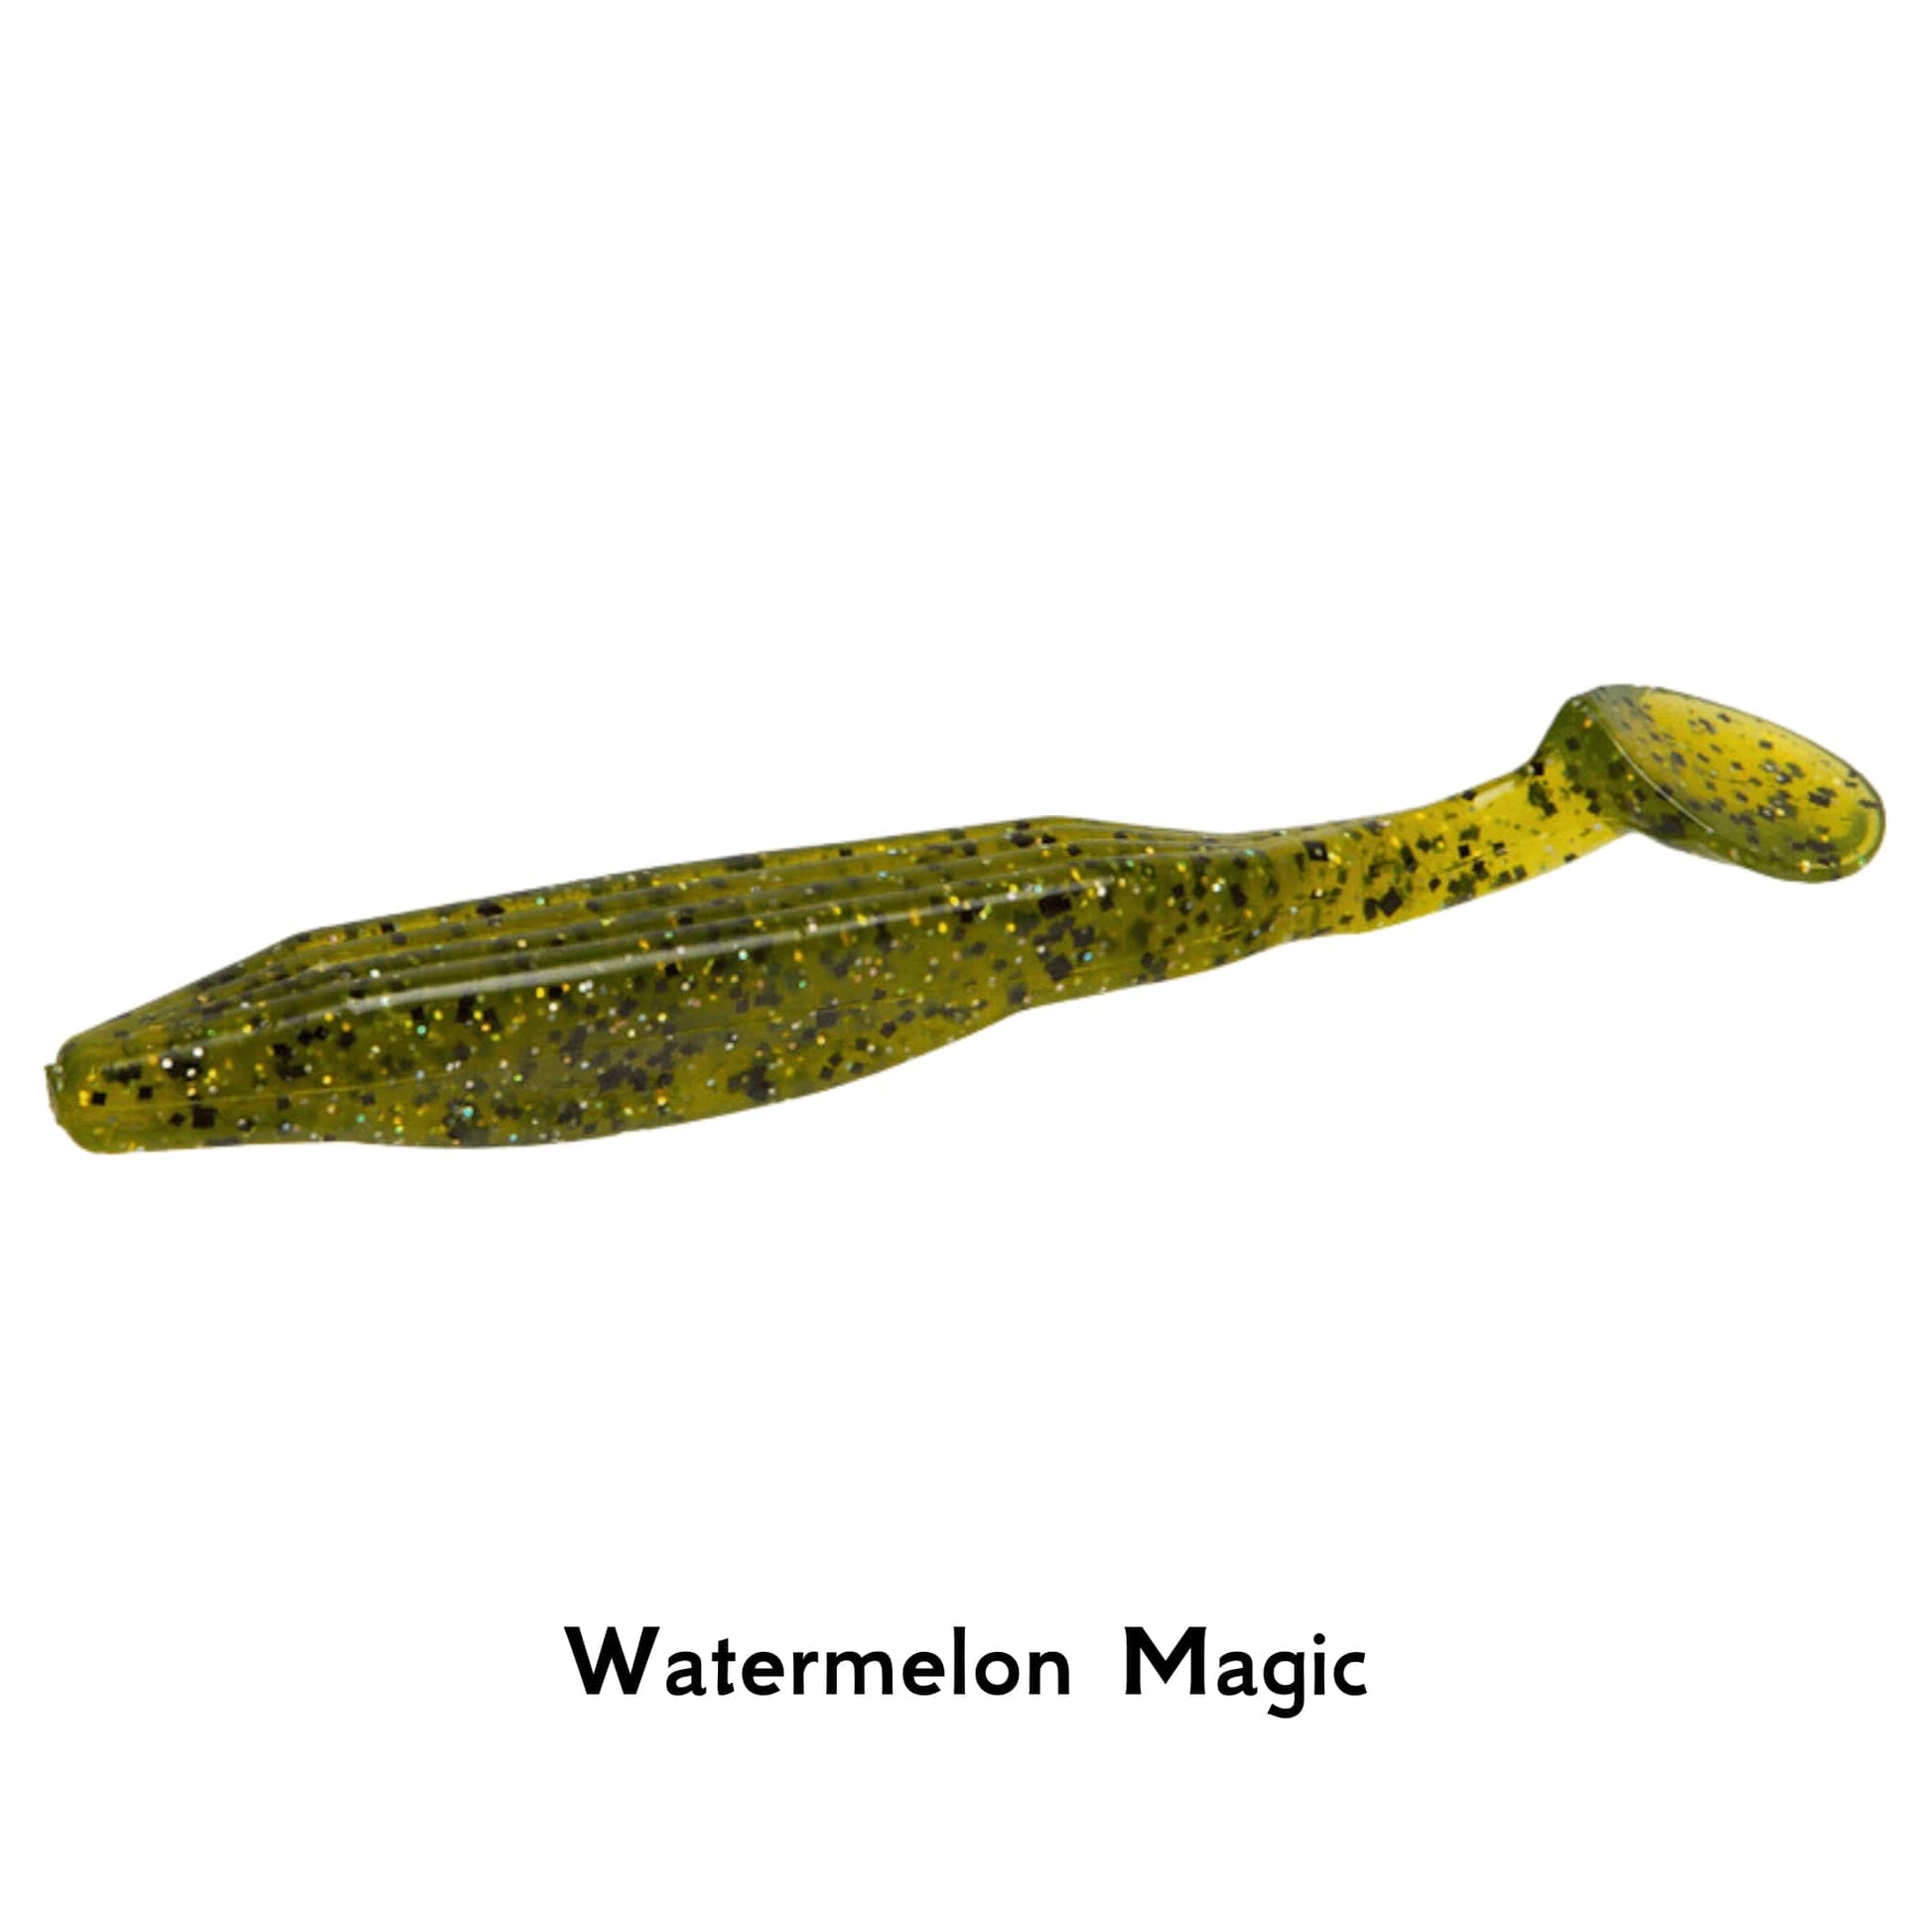 Zoom Swimmin Super Fluke Watermelon Magic 4 Inch 5pcs Soft Bait Fishing Lure ALL COLOURS Paddle Tail Jig Dropshot Lure Texas Carolina Rig Cheb